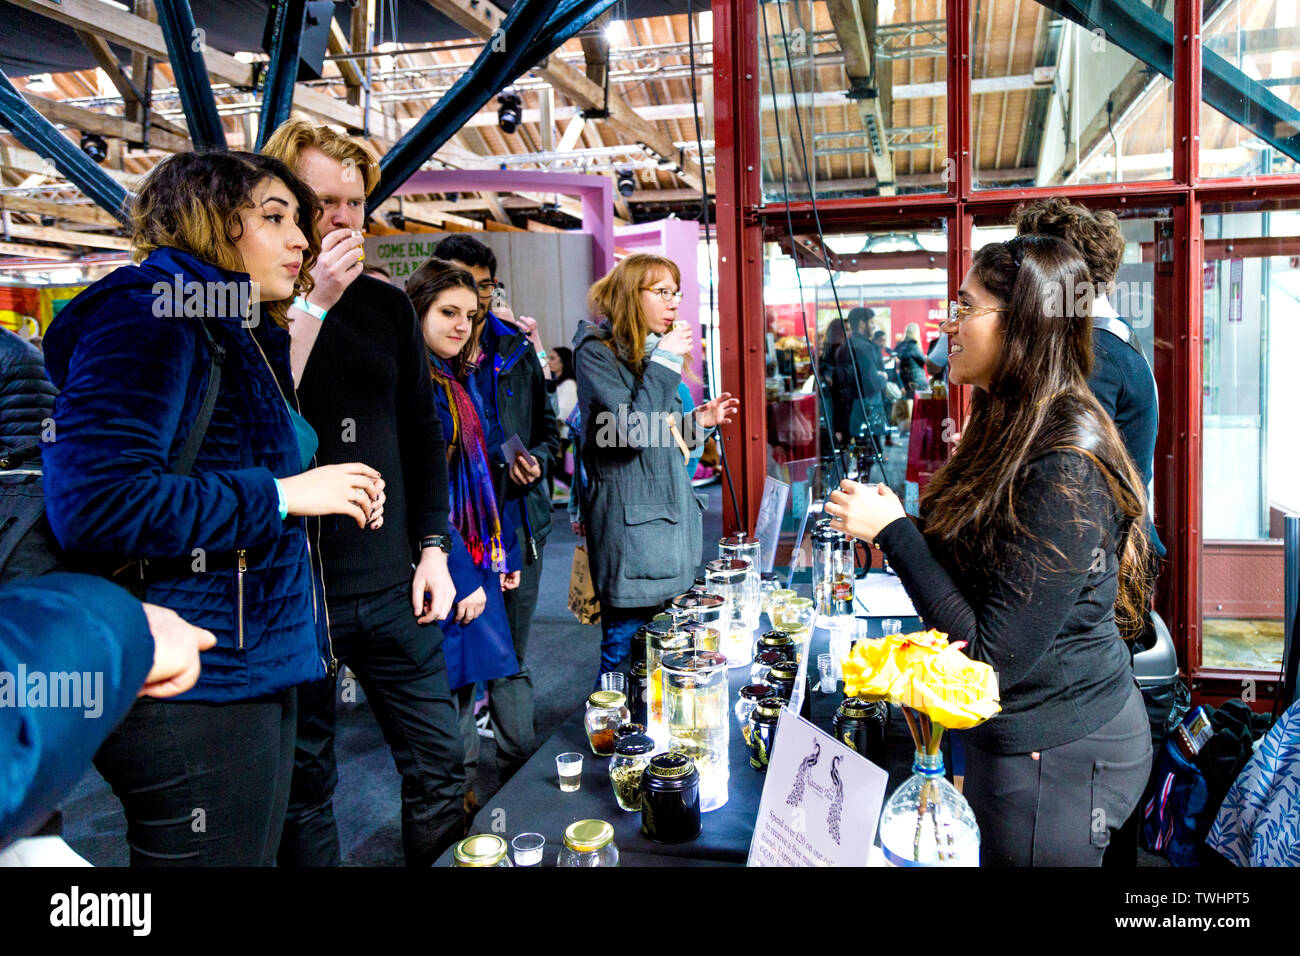 Menschen Verkostung Kaffee in einem Stall (nazani Tee) bei FesTeaVal2019 am Dock, London, UK Stockfoto